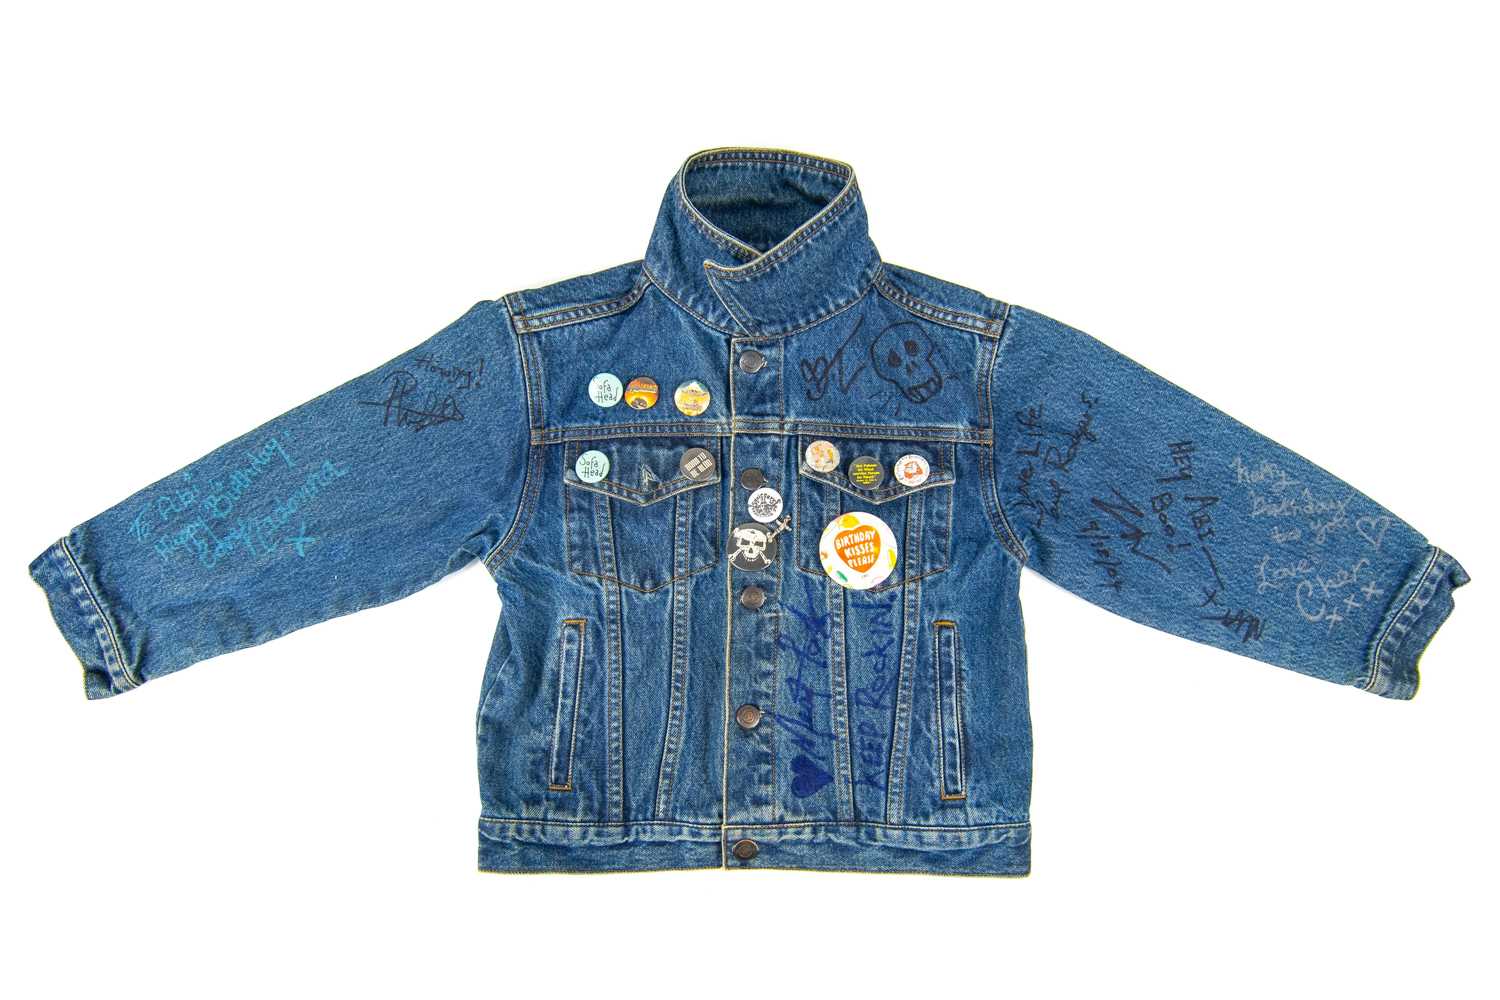 An extensively signed 'Hard Rock Cafe' Las Vegas, denim jacket.